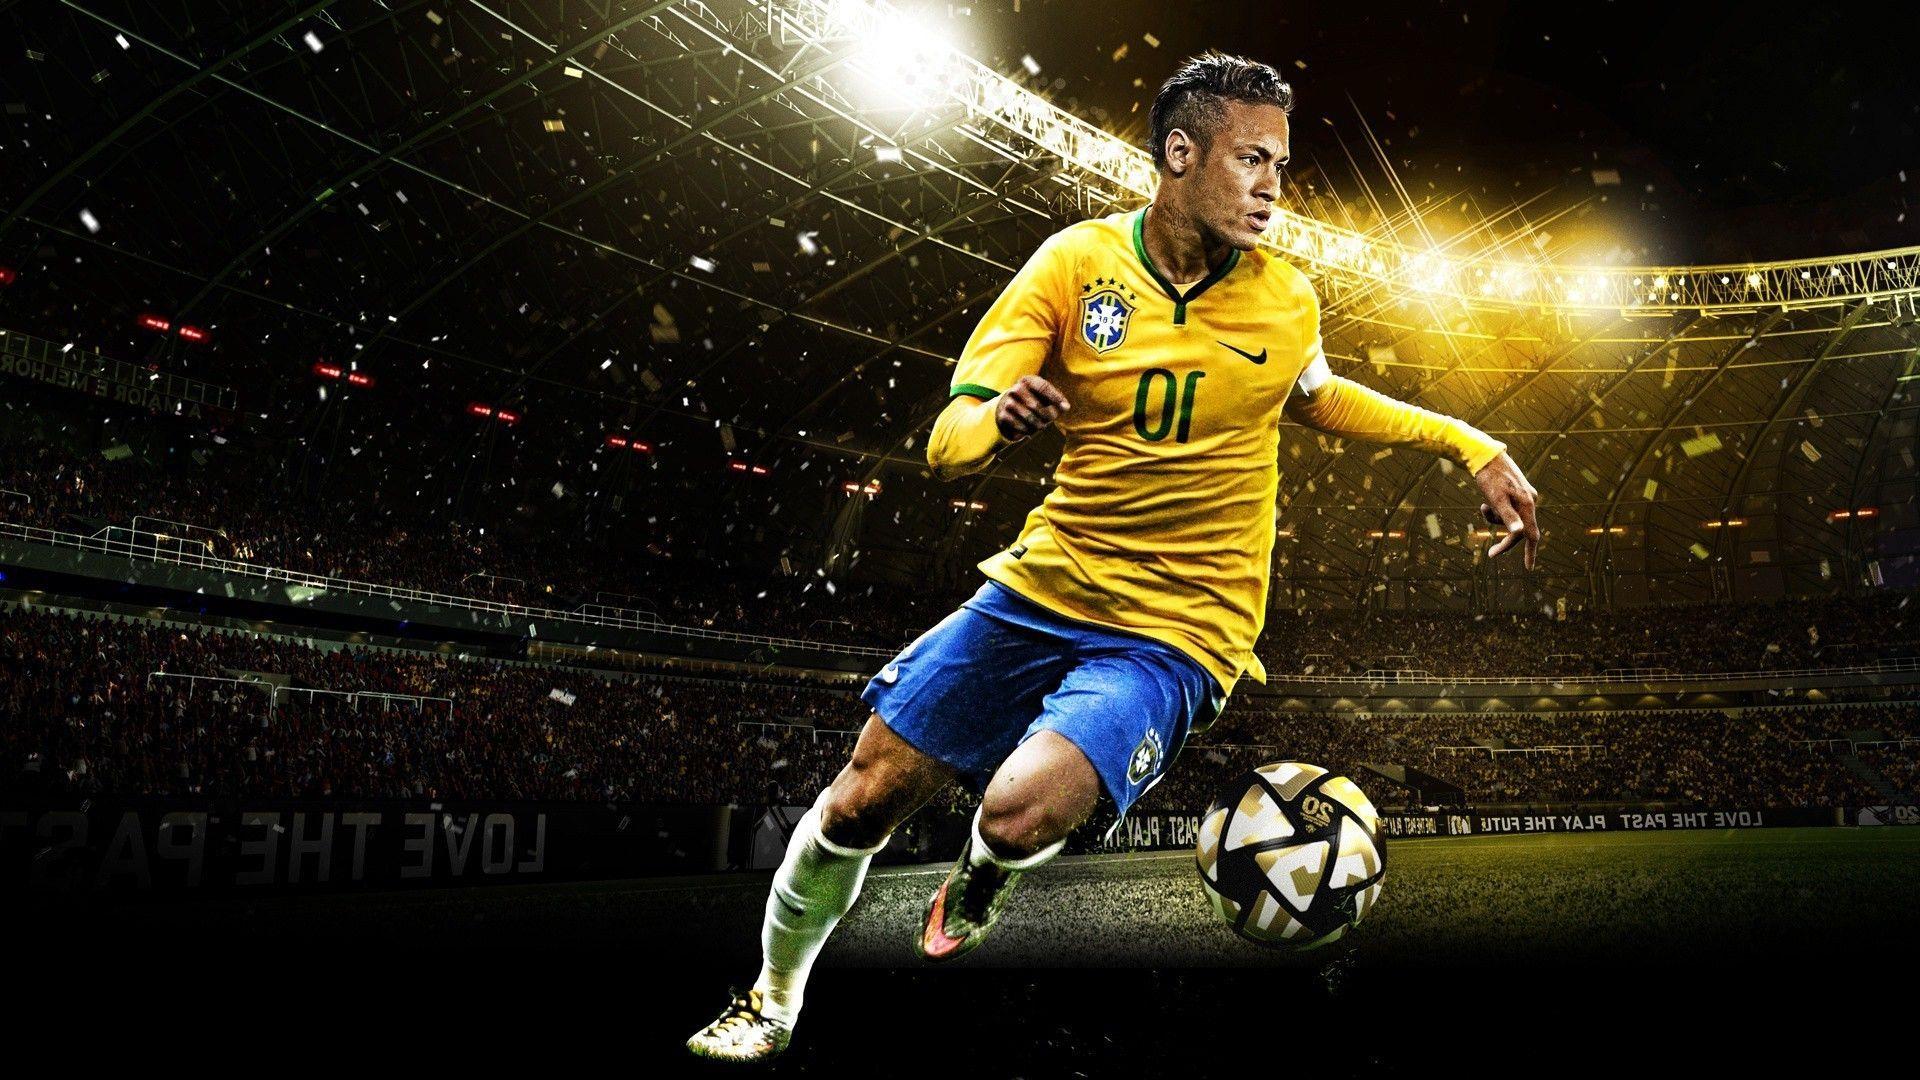 neymar jr HD image and Background Image HD